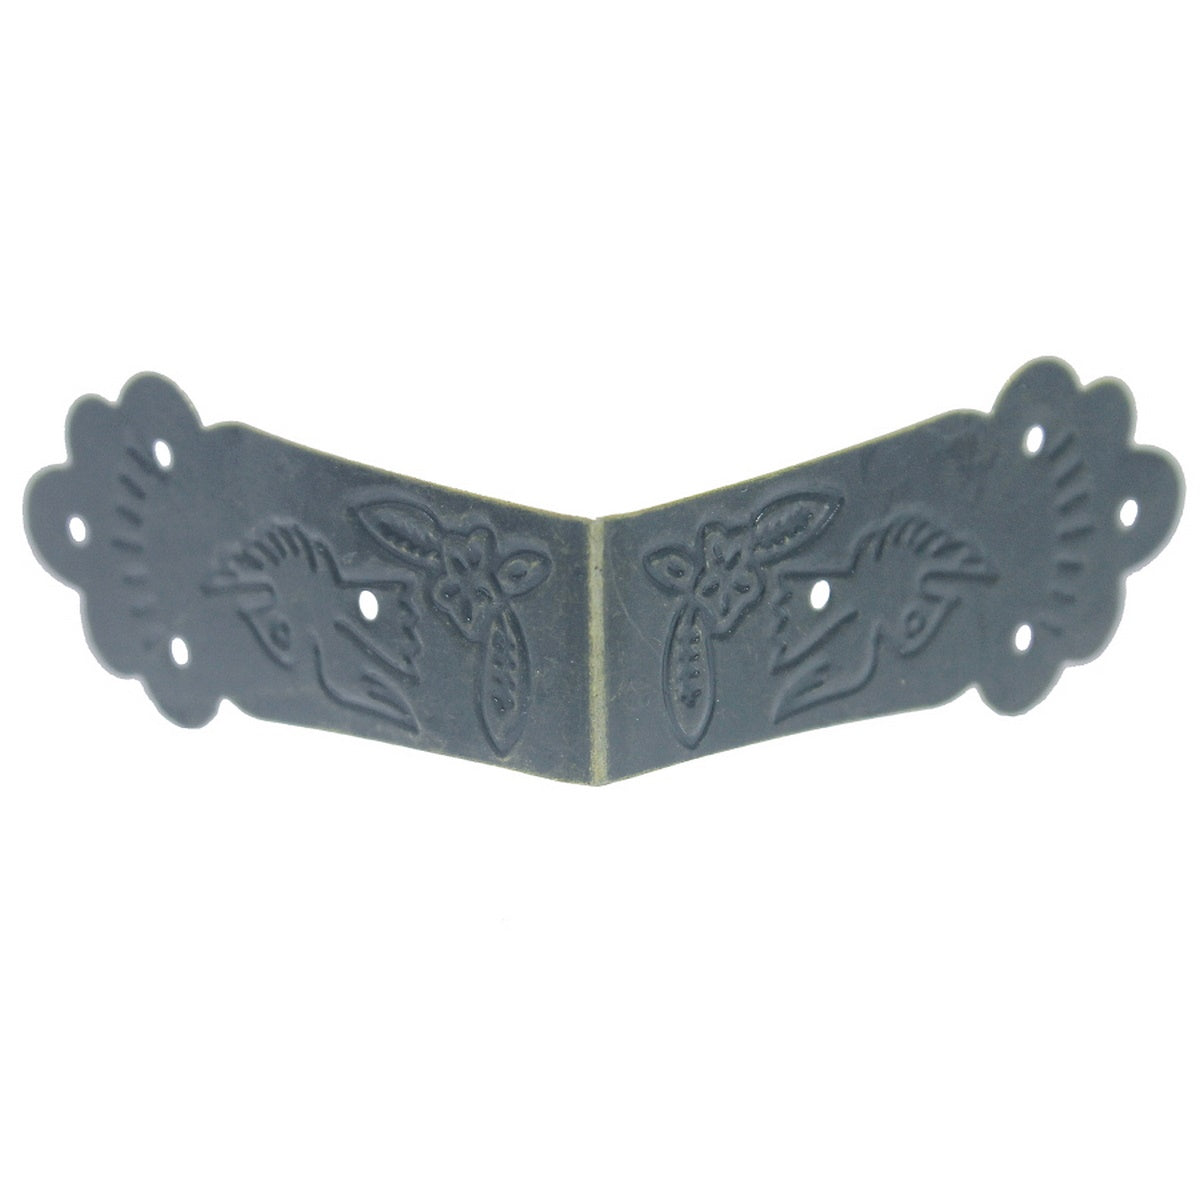 jags-mumbai Pendant "Craft Fitting Corner Side Metal 4pcs CB012 - Sturdy and Versatile Metal Corners for DIY Projects"